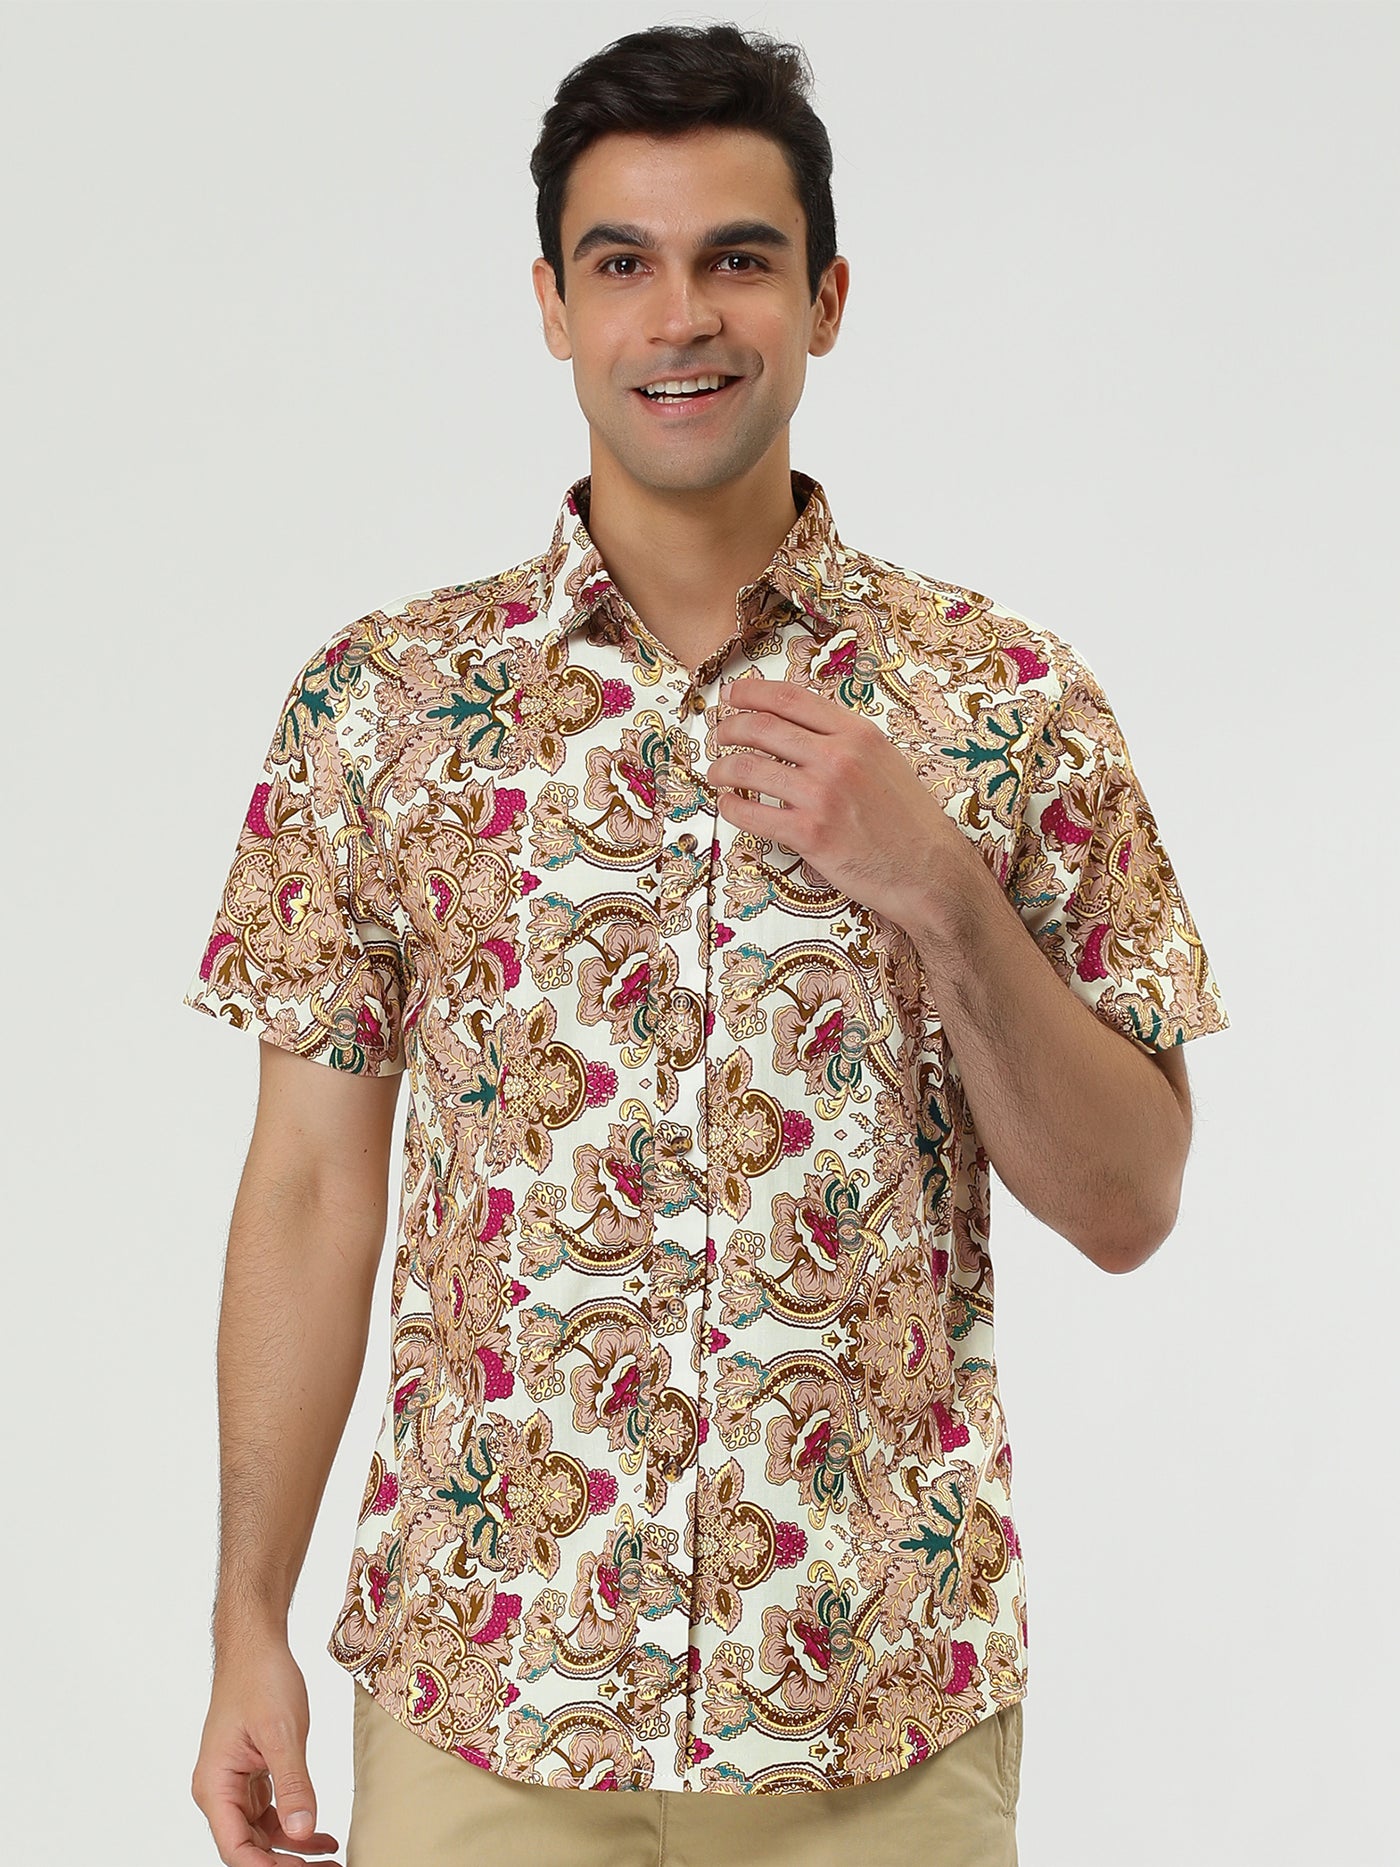 Bublédon Chic Hawaiian Floral Print Summer Button Beach Shirt